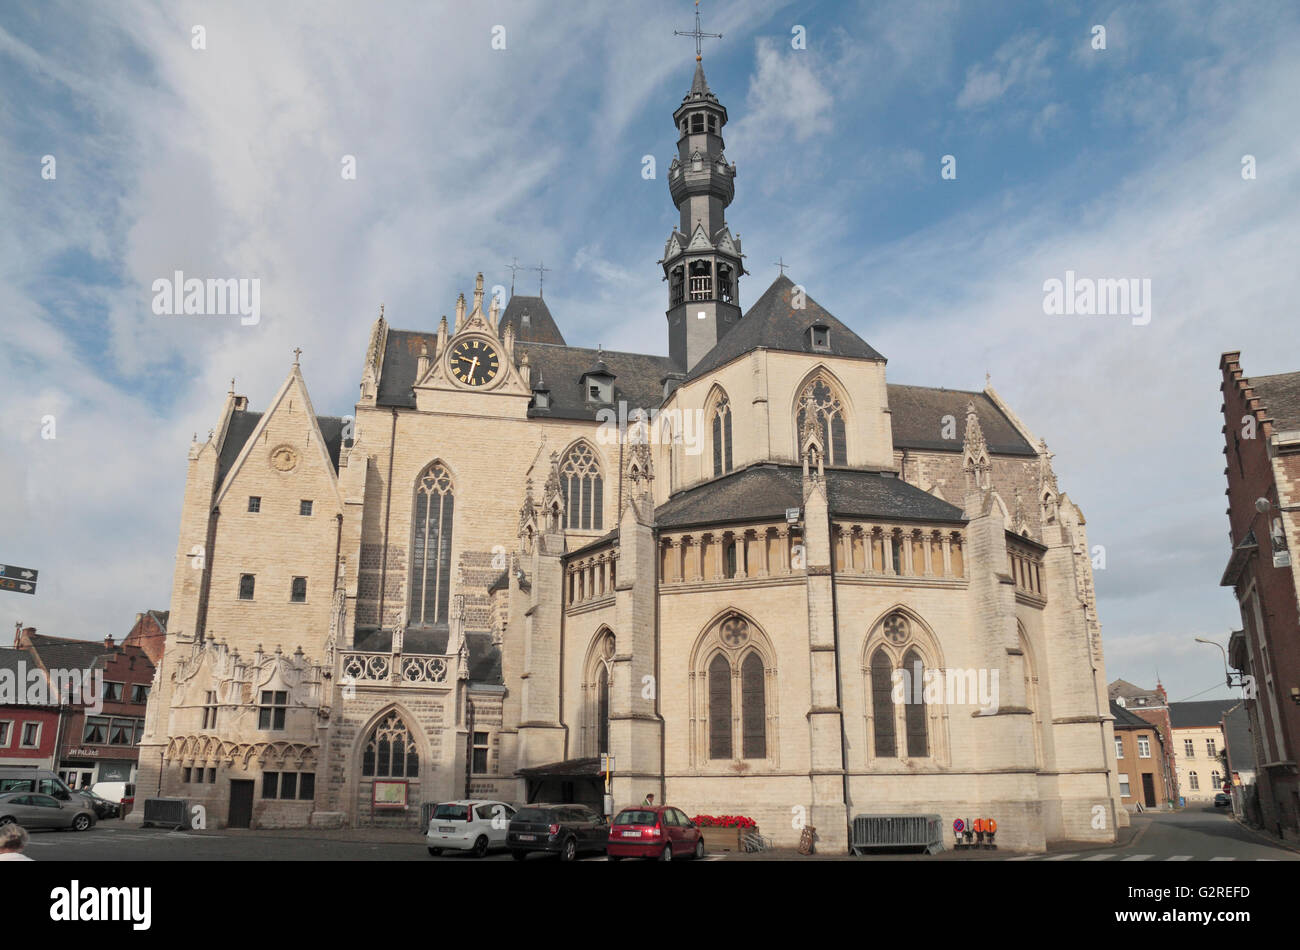 Die UNESCO-geschützte Sint-Leonarduskerk (Kirche St. Leonard) in Zoutleeuw, Hageland, Belgien. Stockfoto